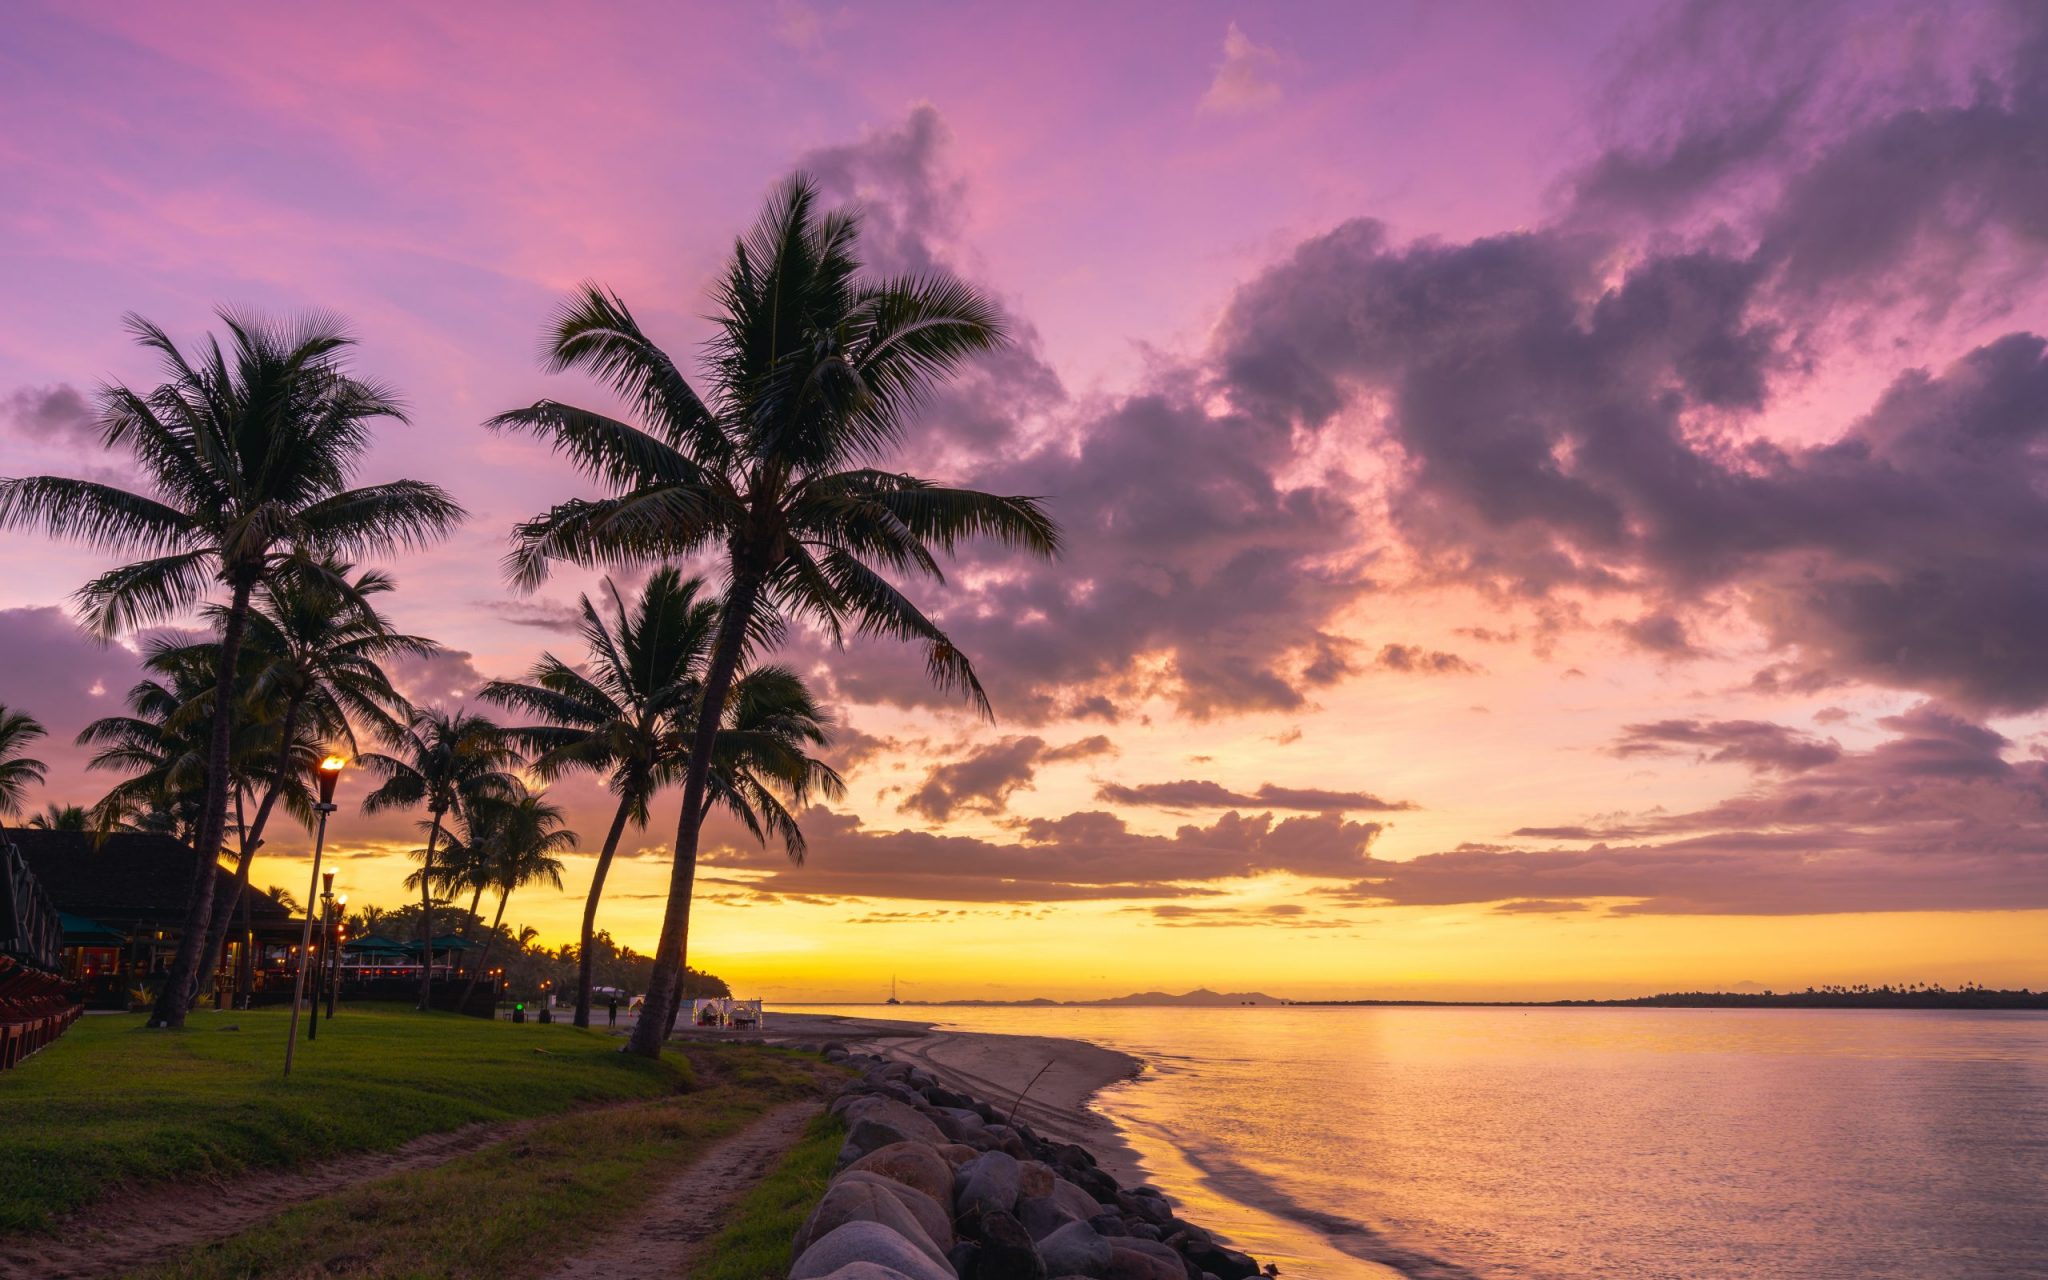 Fijian coastline at sunset